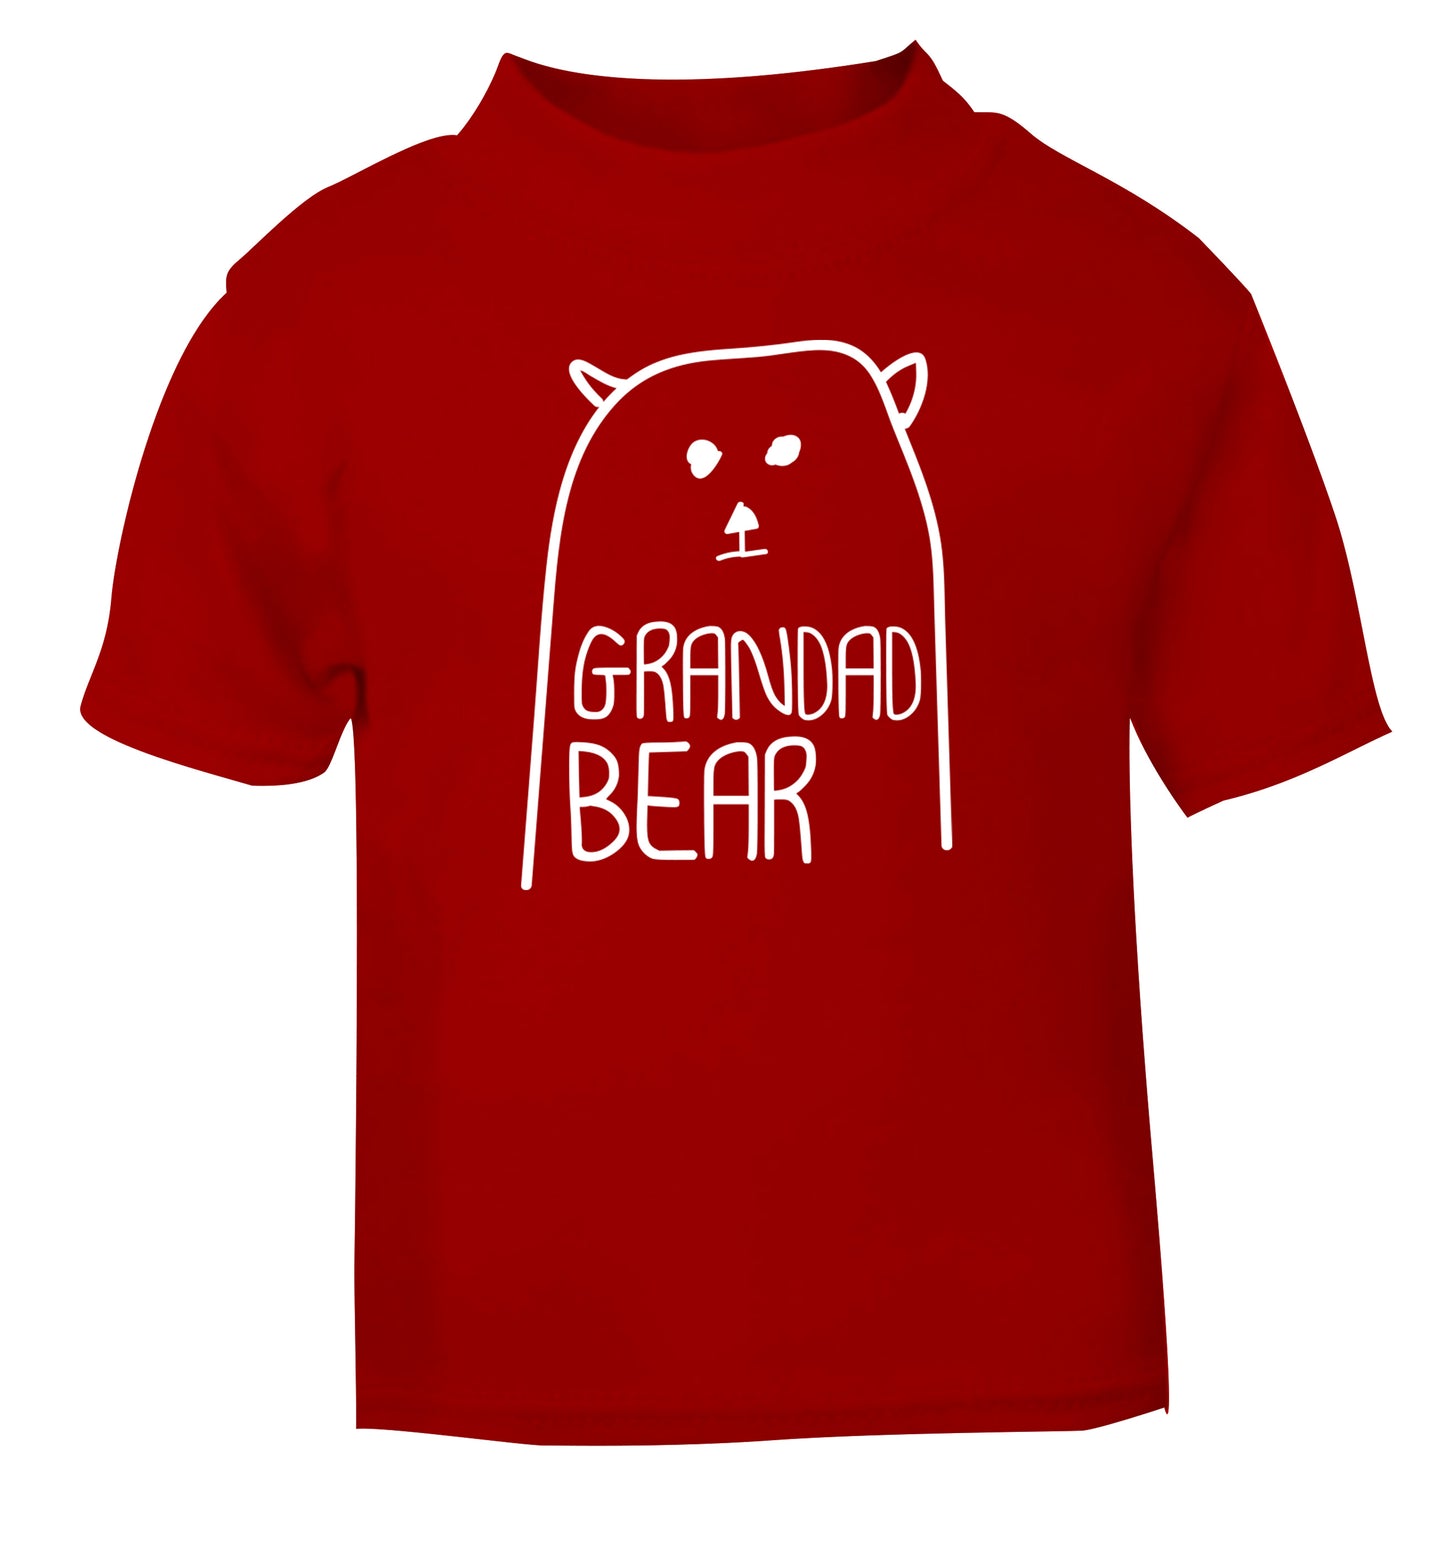 Grandad bear red Baby Toddler Tshirt 2 Years